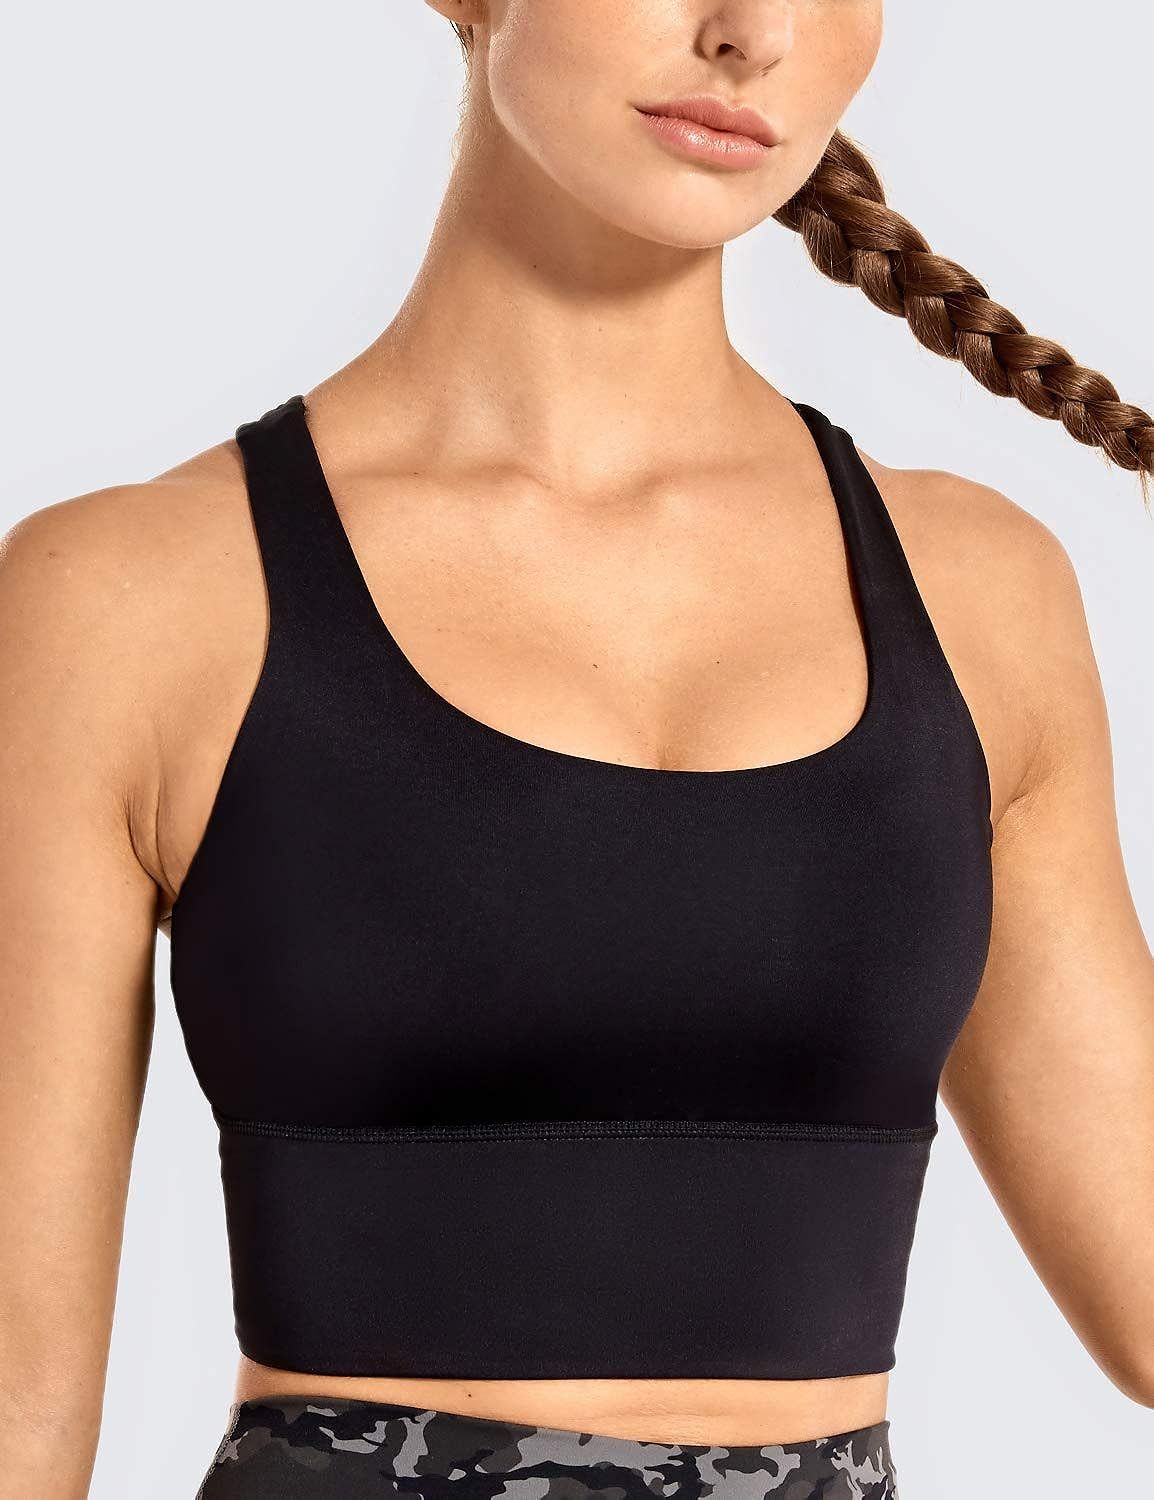 CRZ YOGA Women's Medium Impact Wirefree Padded Strappy Longline Sports Bras | Amazon (US)